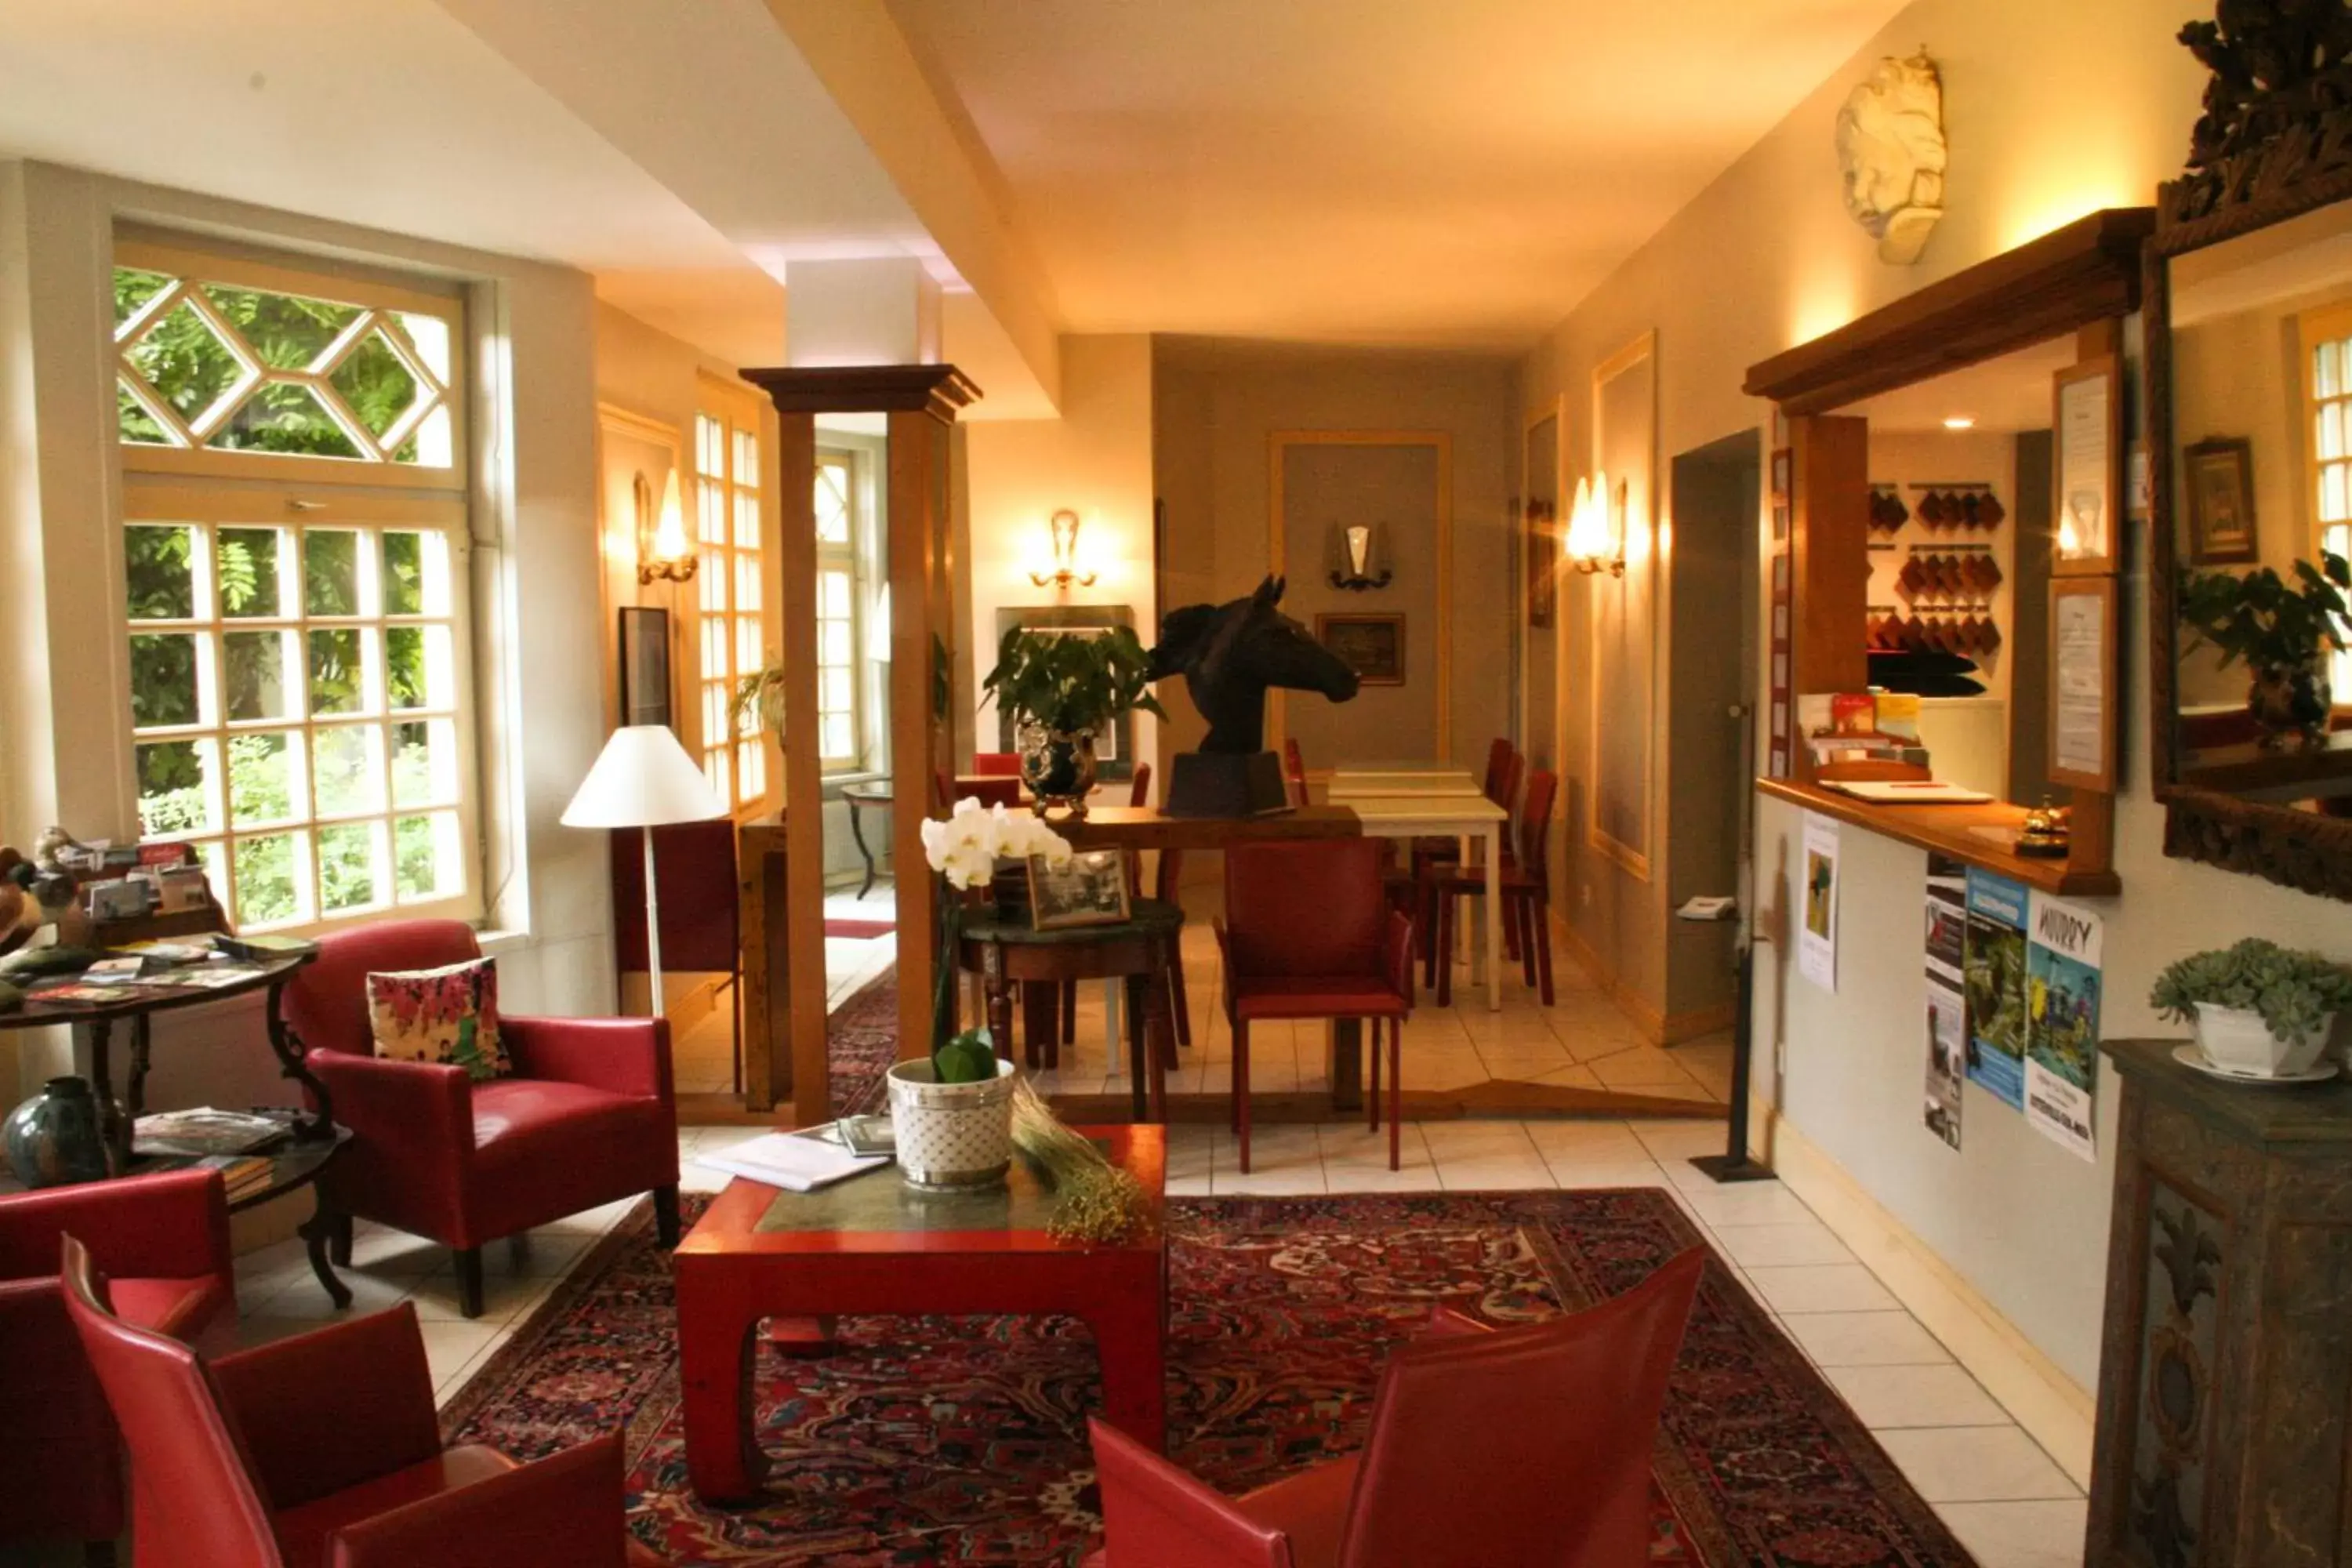 Lobby or reception in Relais Hôtelier Douce France